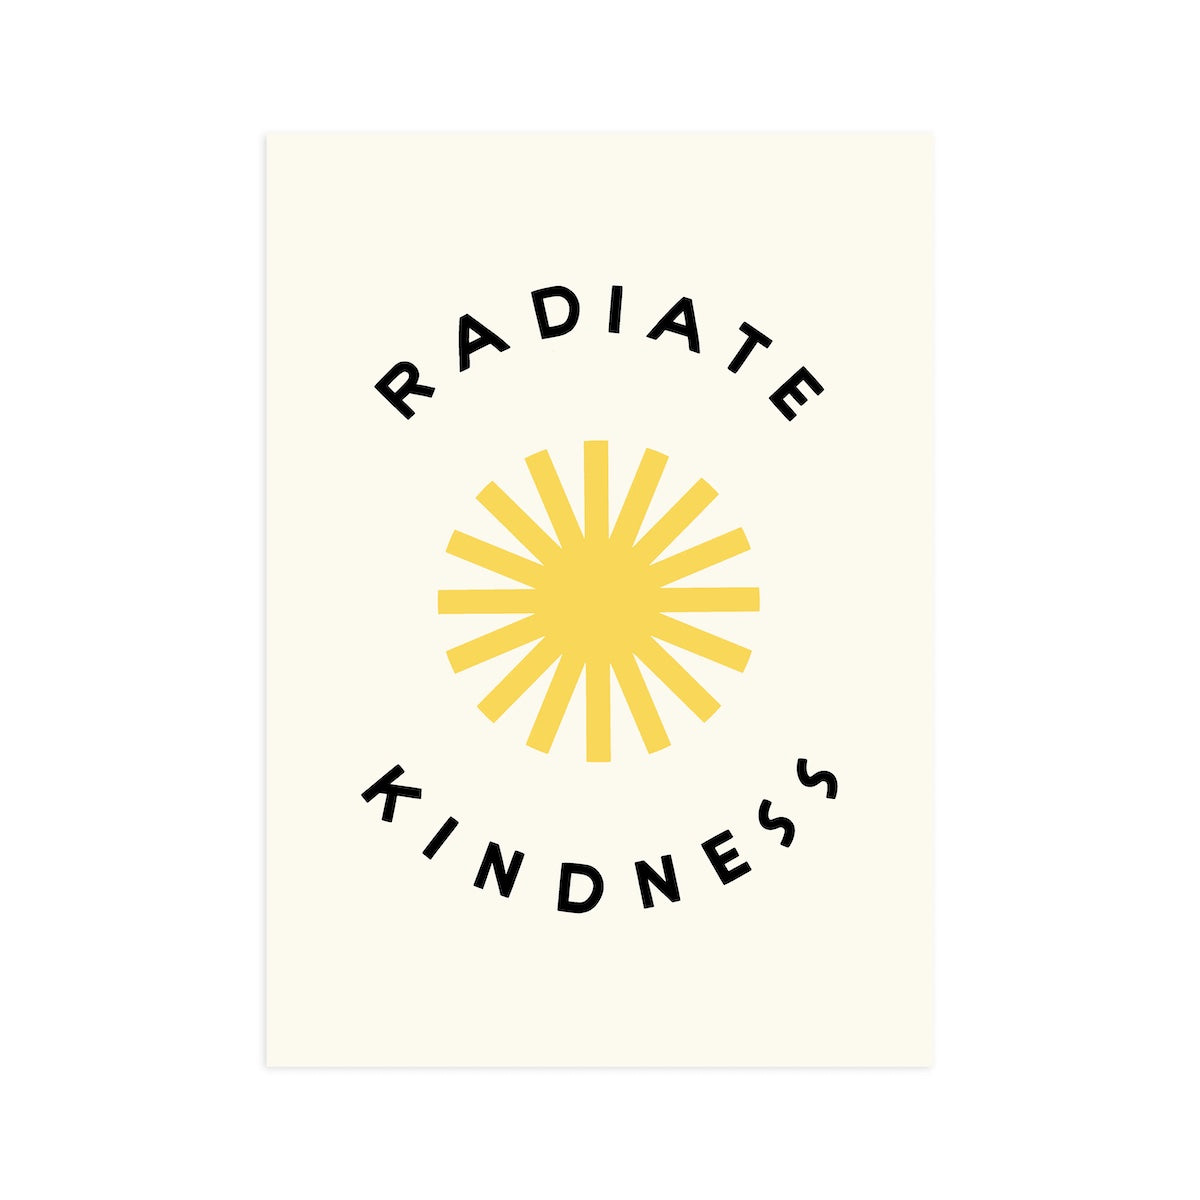 Radiate Kindness Art Card Print - P I C N I C 